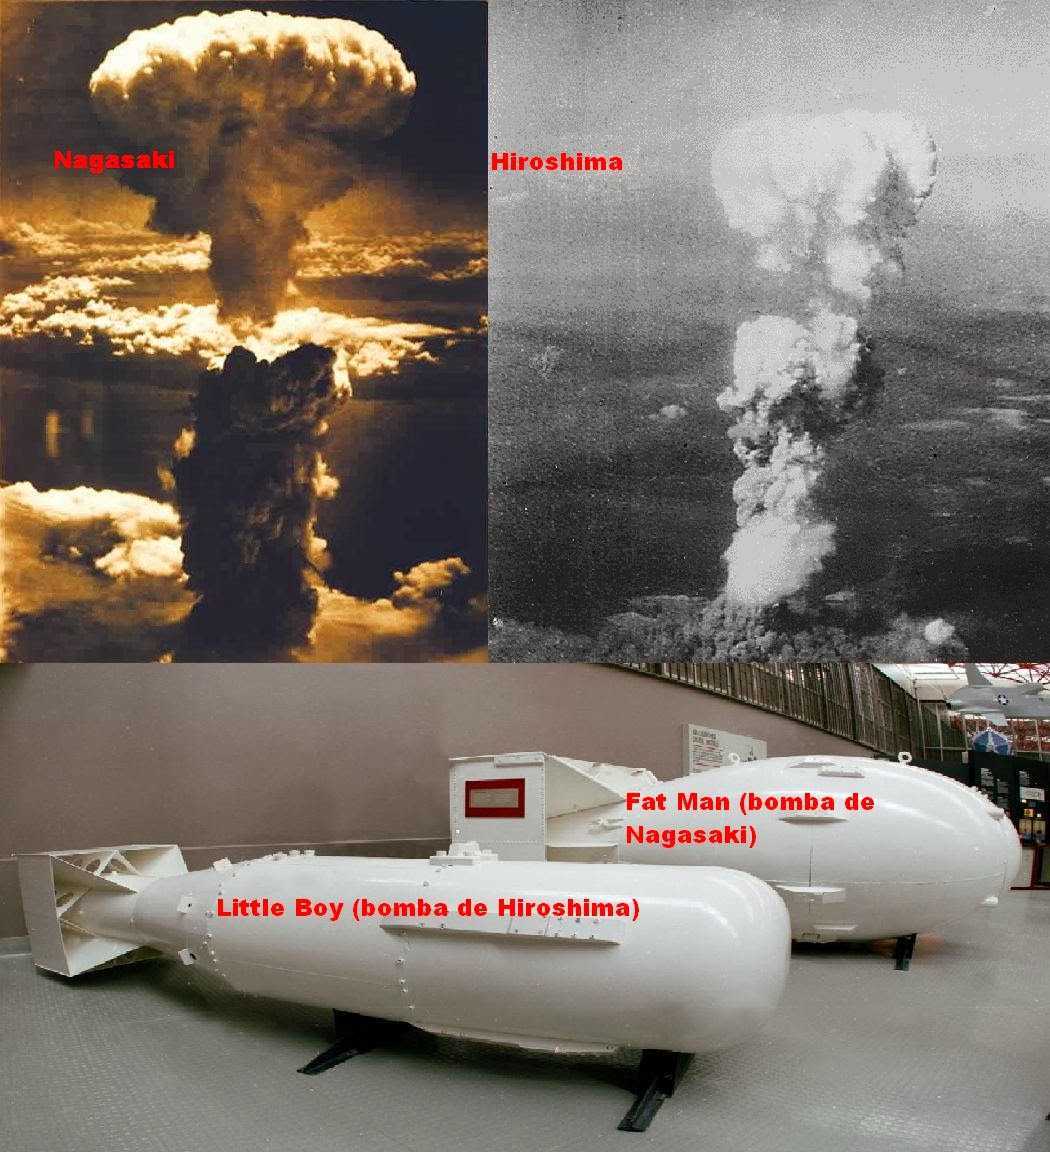 Почему скинули бомбу на хиросиму. Хиросима и Нагасаки атомная бомба. Нагасаки и Хиросима США атамнойьомба. Ядерное оружие США Хиросима Нагасаки. Япония 1945 Хиросима и Нагасаки.